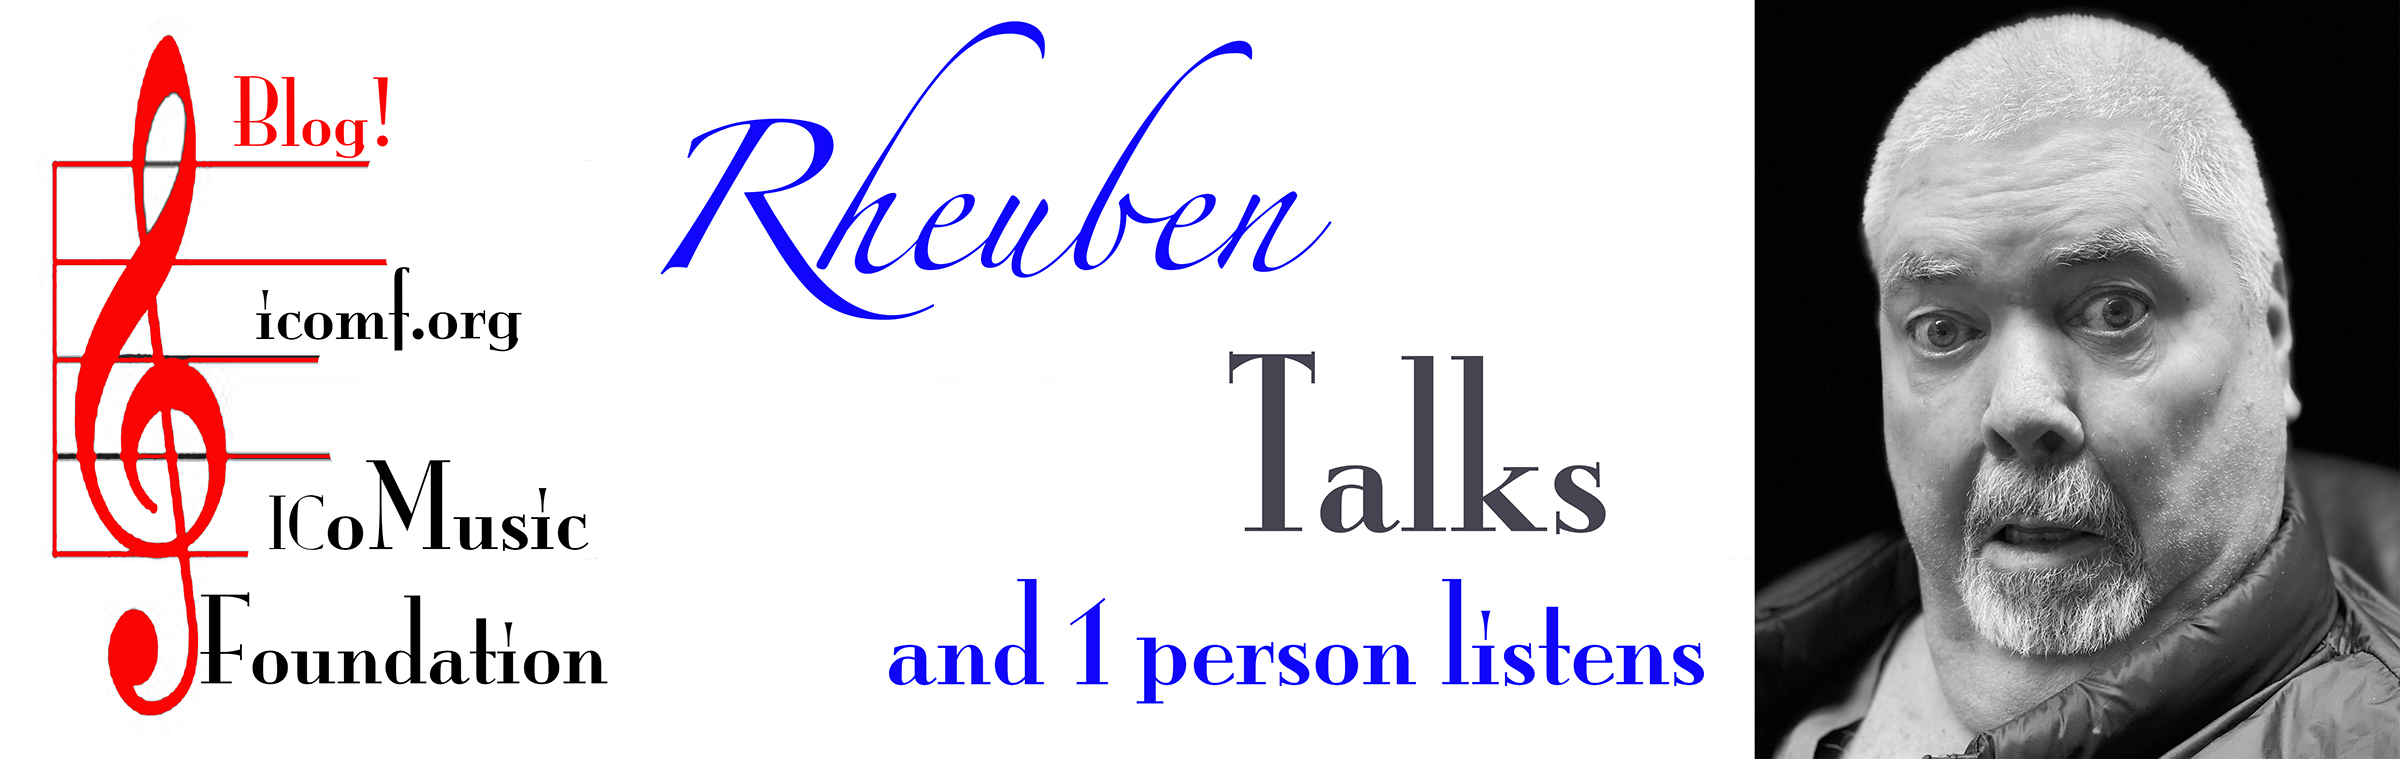 Rheuben Talks and 1 person listens